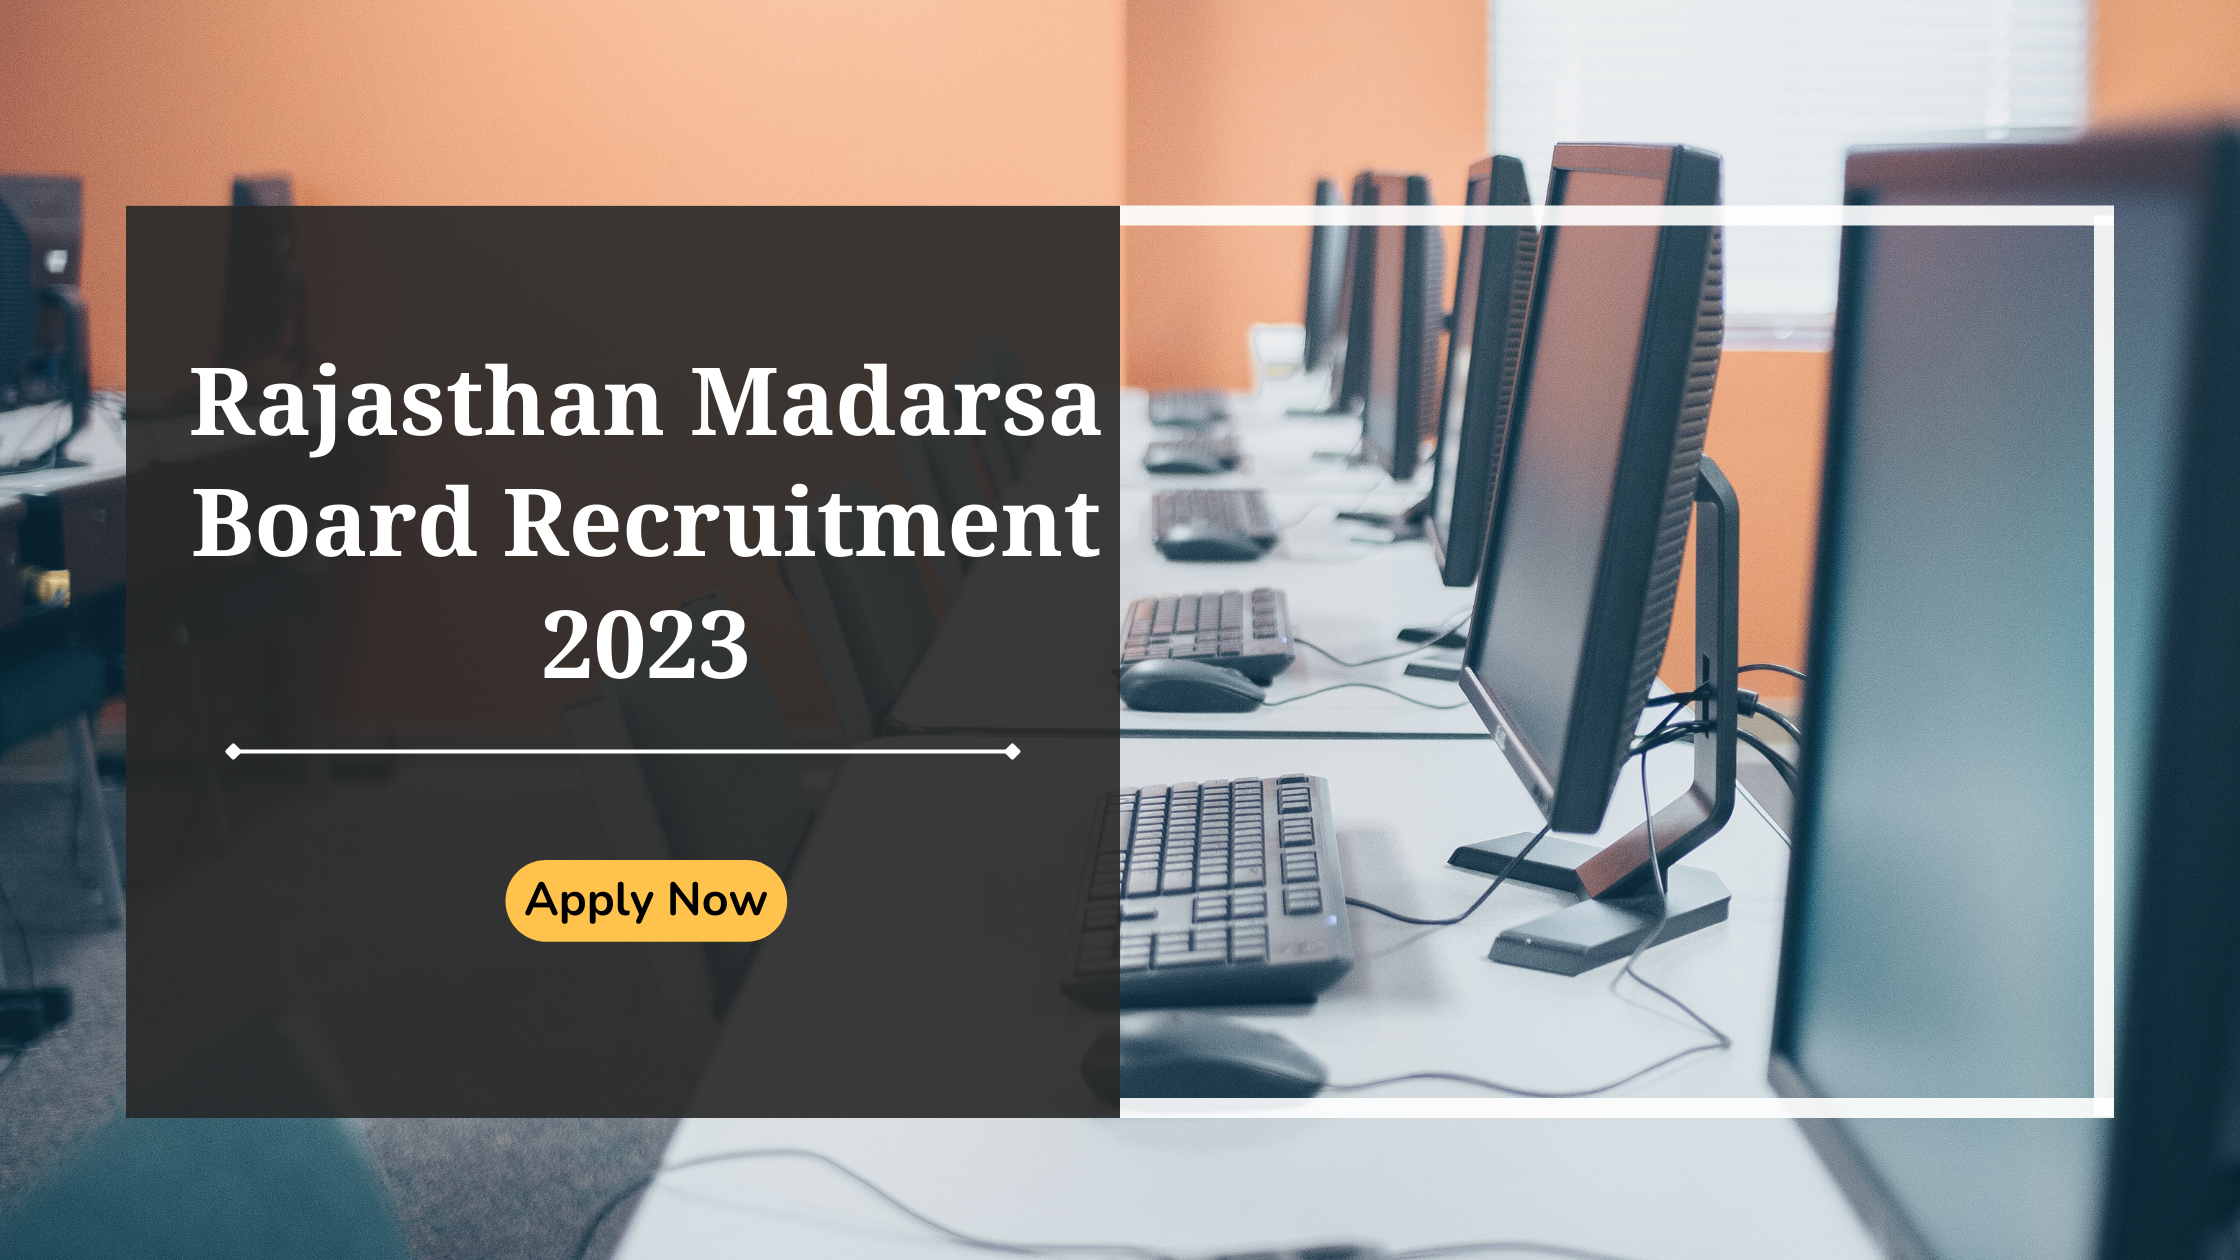 Rajasthan Madarsa Board Recruitment 2023 Apply Now